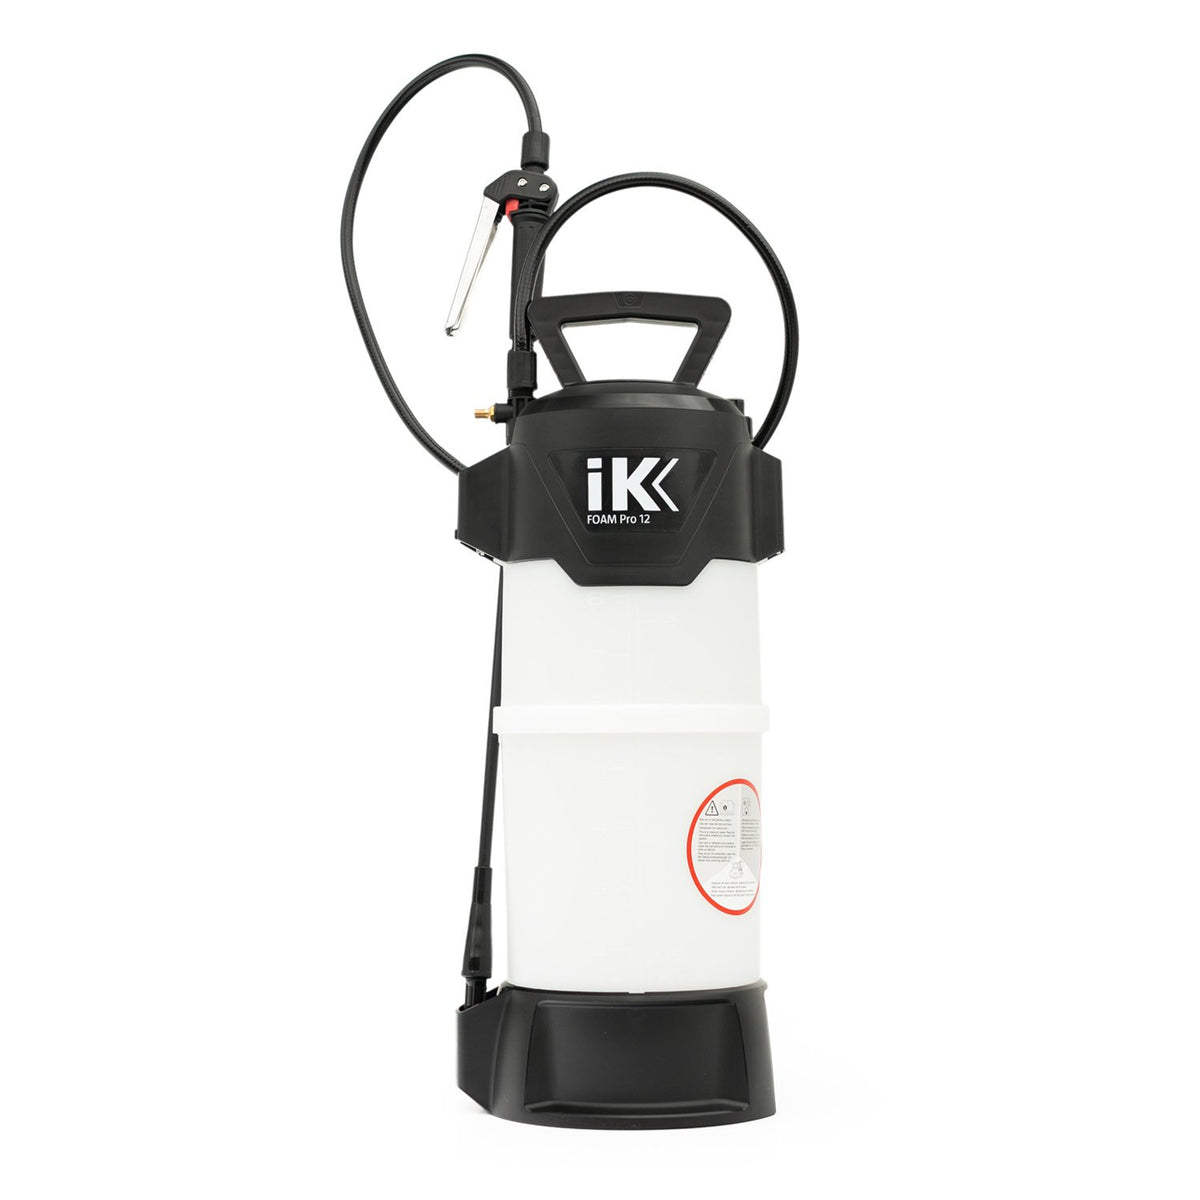 iK Foam Pro 12 Sprayer | The Rag Company